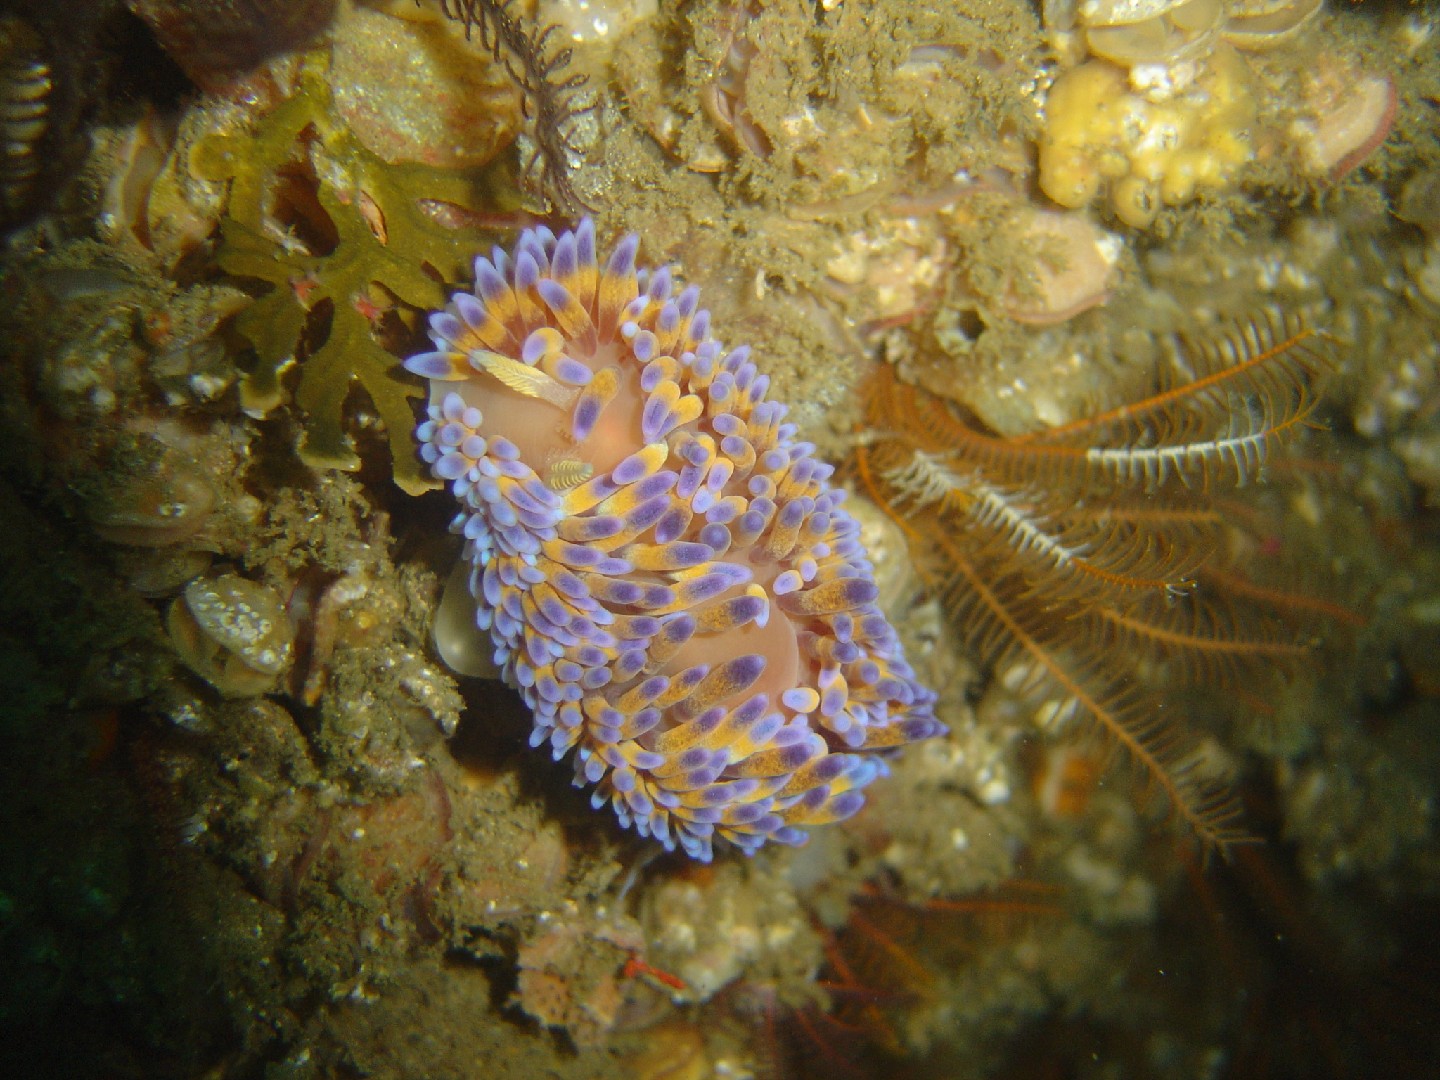 Gasflame nudibranch (Bonisa)